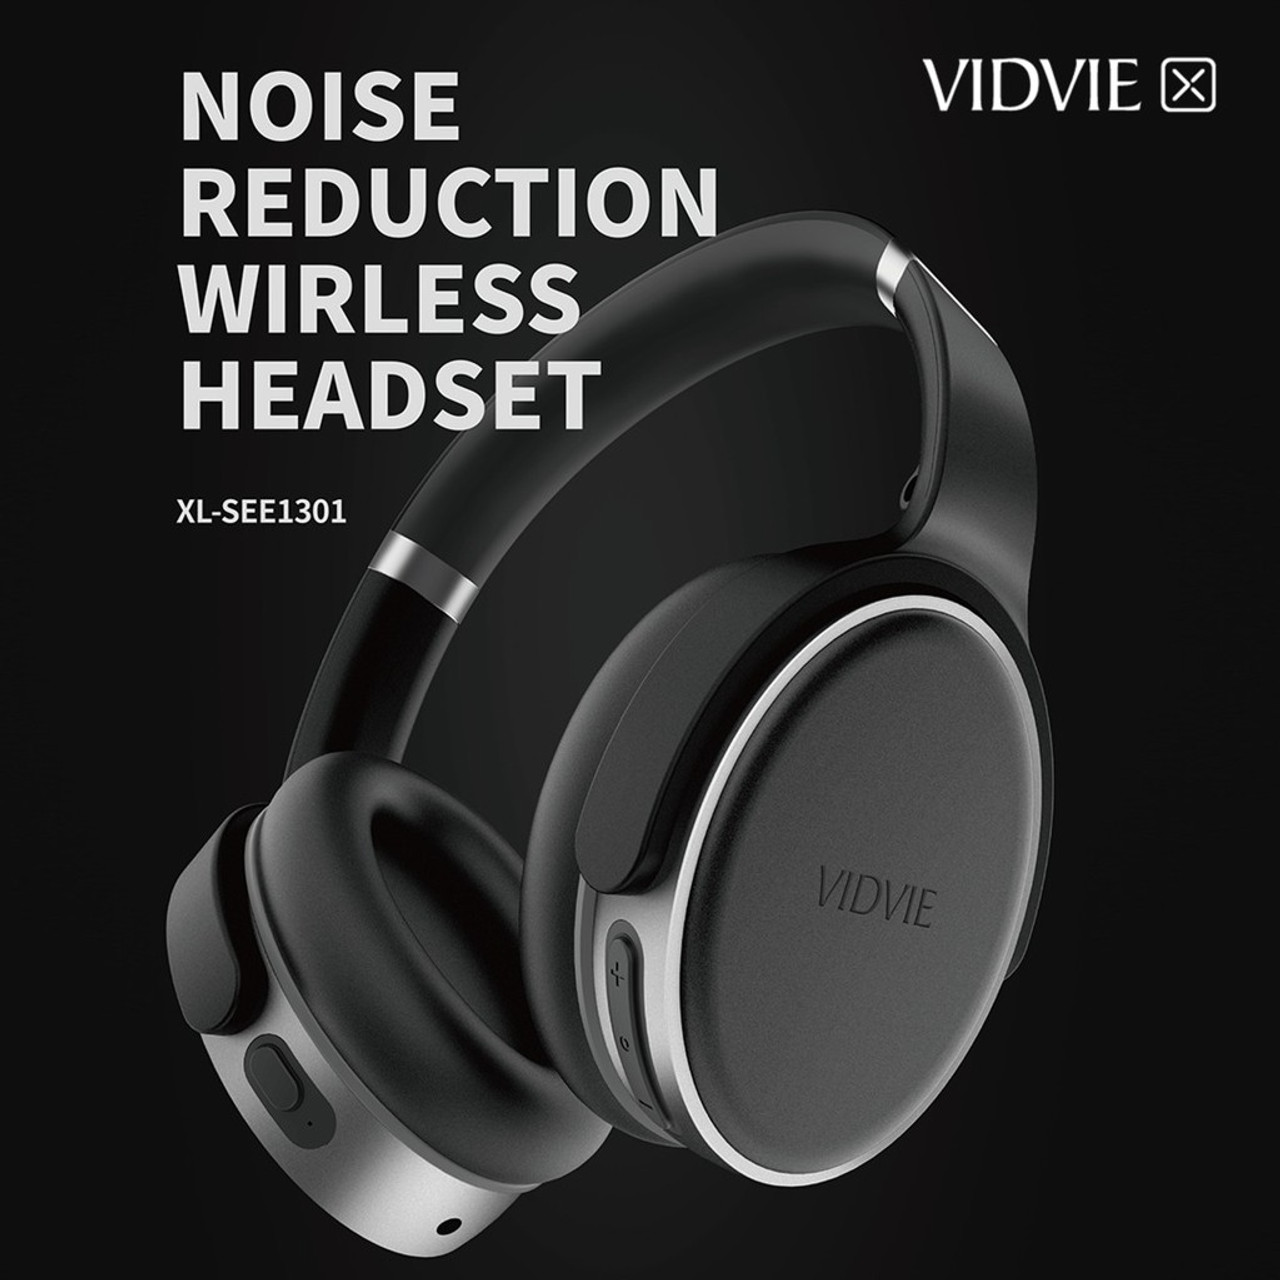 Vidvie Noise Reduction Bluetooth Earphone XL-SEE1301 1